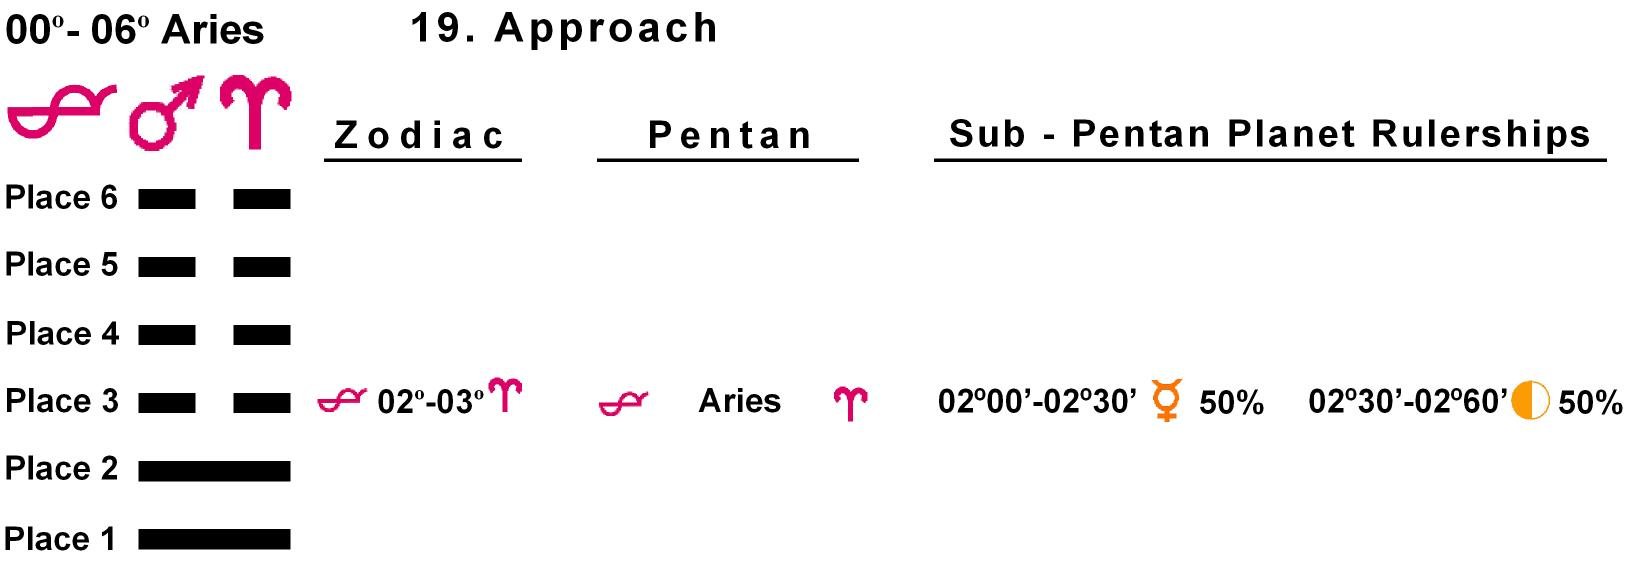 Pent-lines-01AR 02-03 Hx-19 Approach